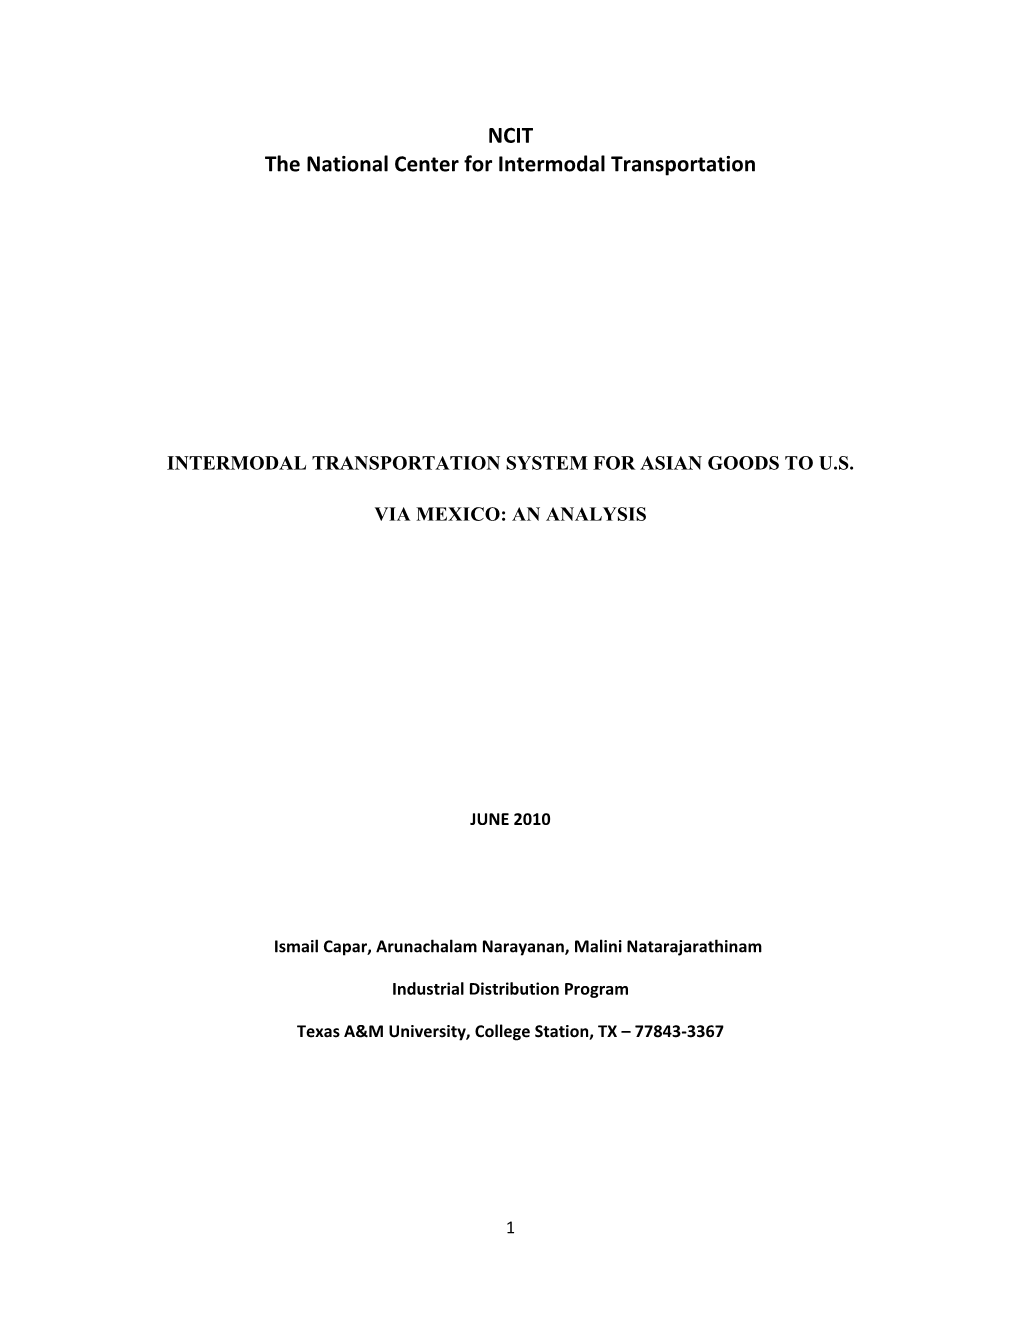 NCIT the National Center for Intermodal Transportation